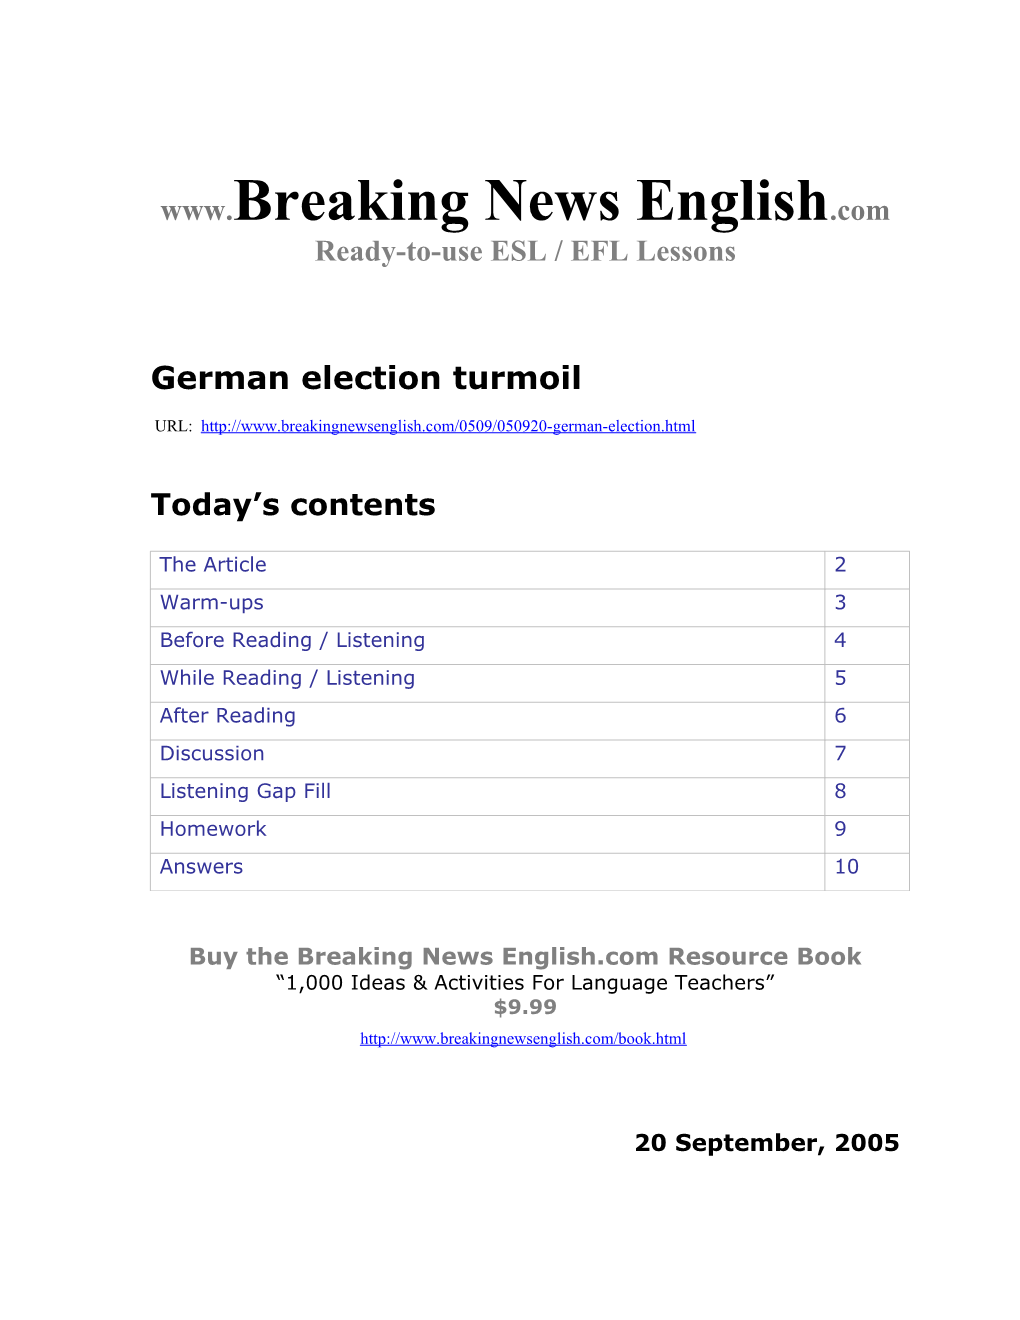 German Election Turmoil